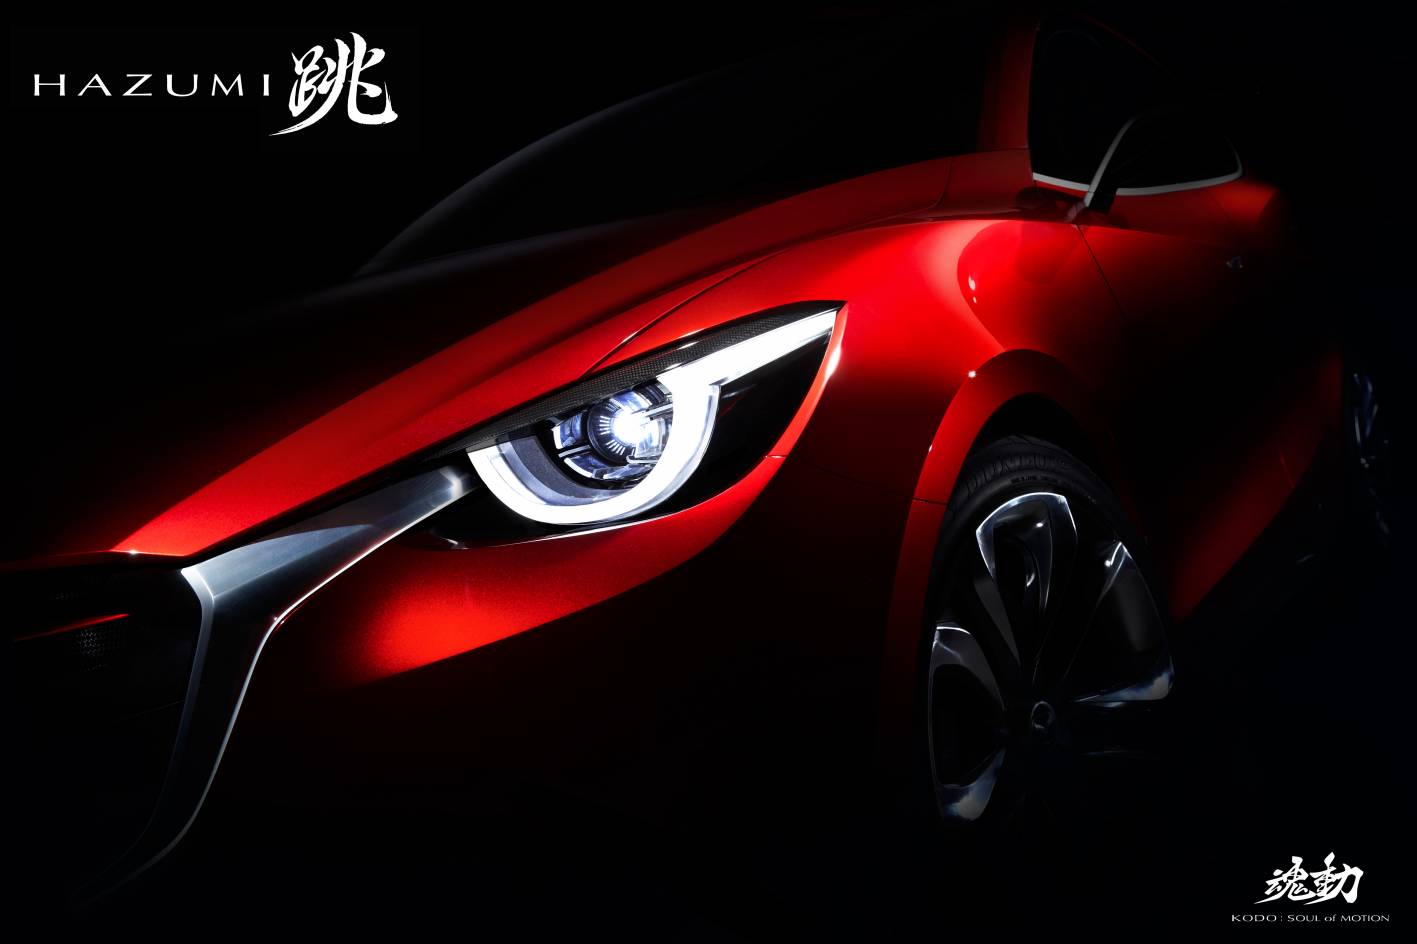 Mazda HAZUMI Concept set for Geneva Motor Show